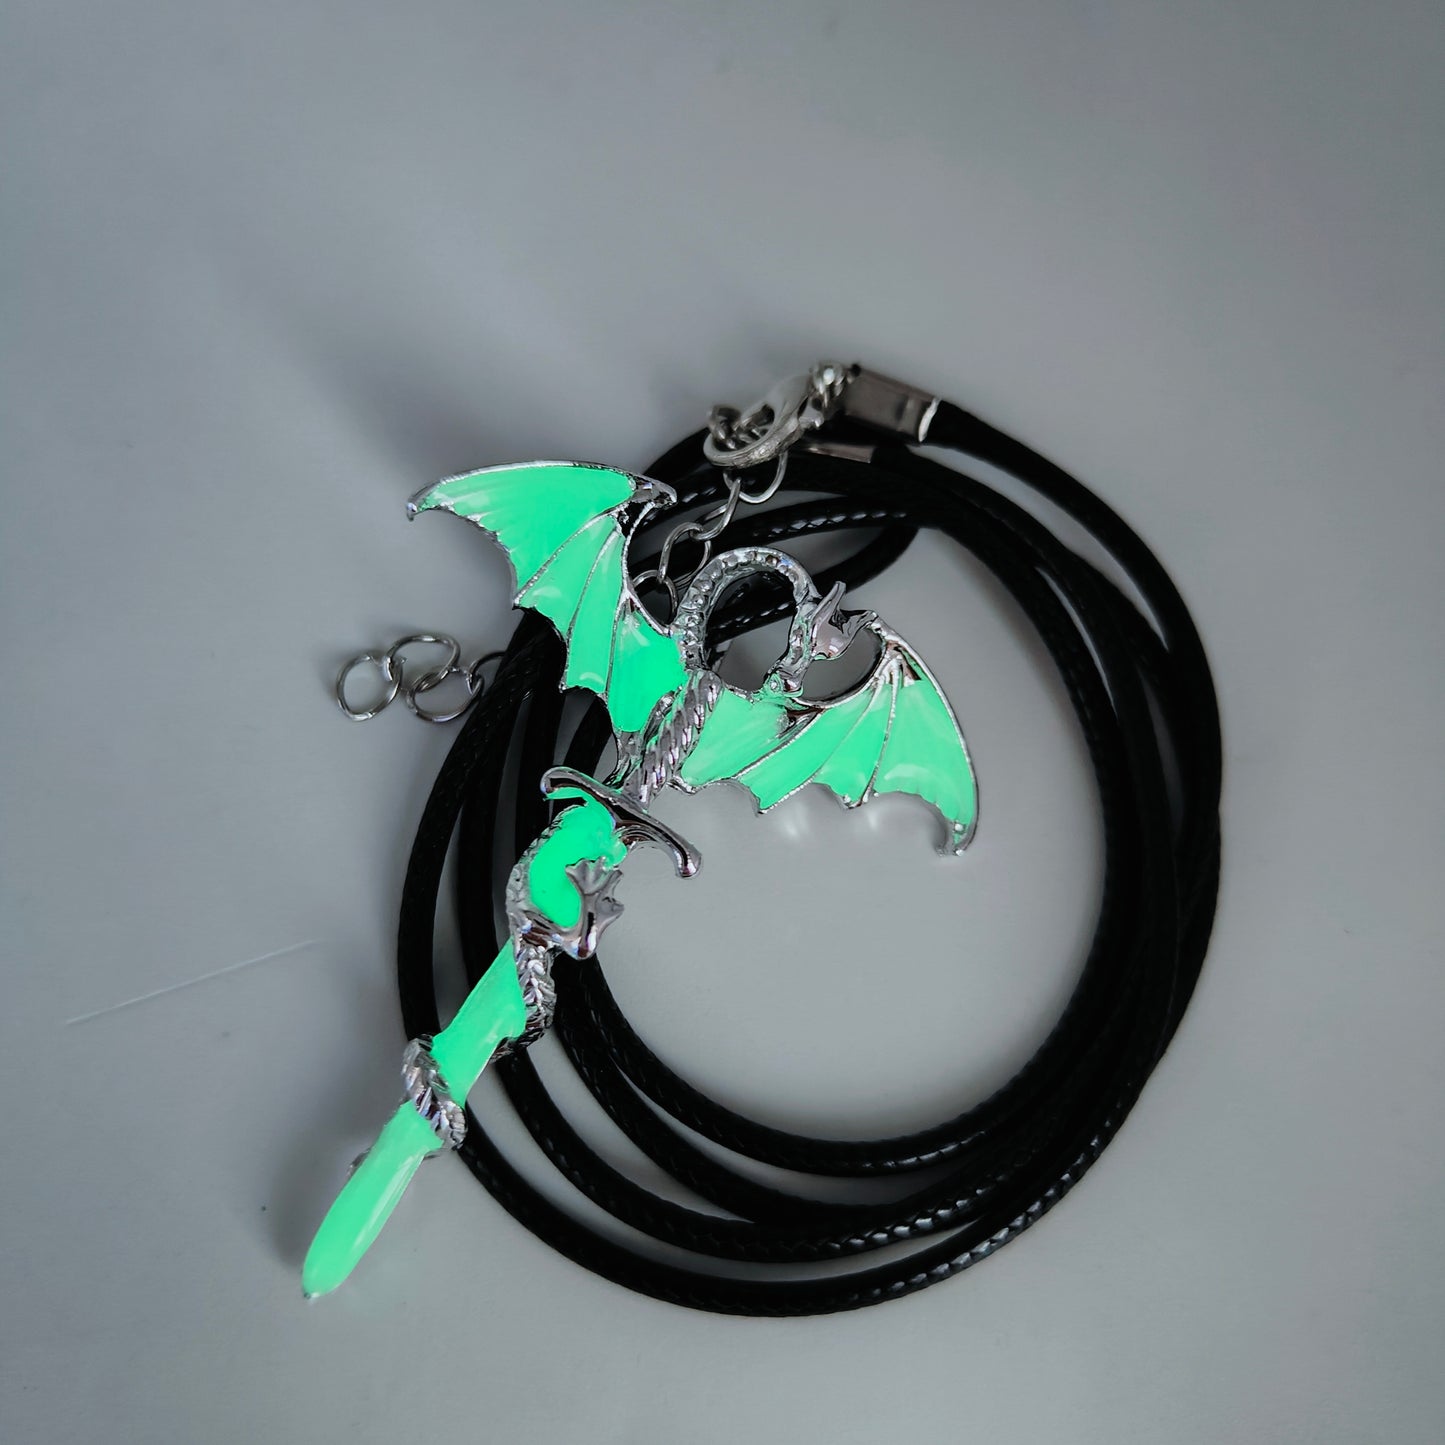 Glow in the Dark Dragon Sword Pendant and Chain